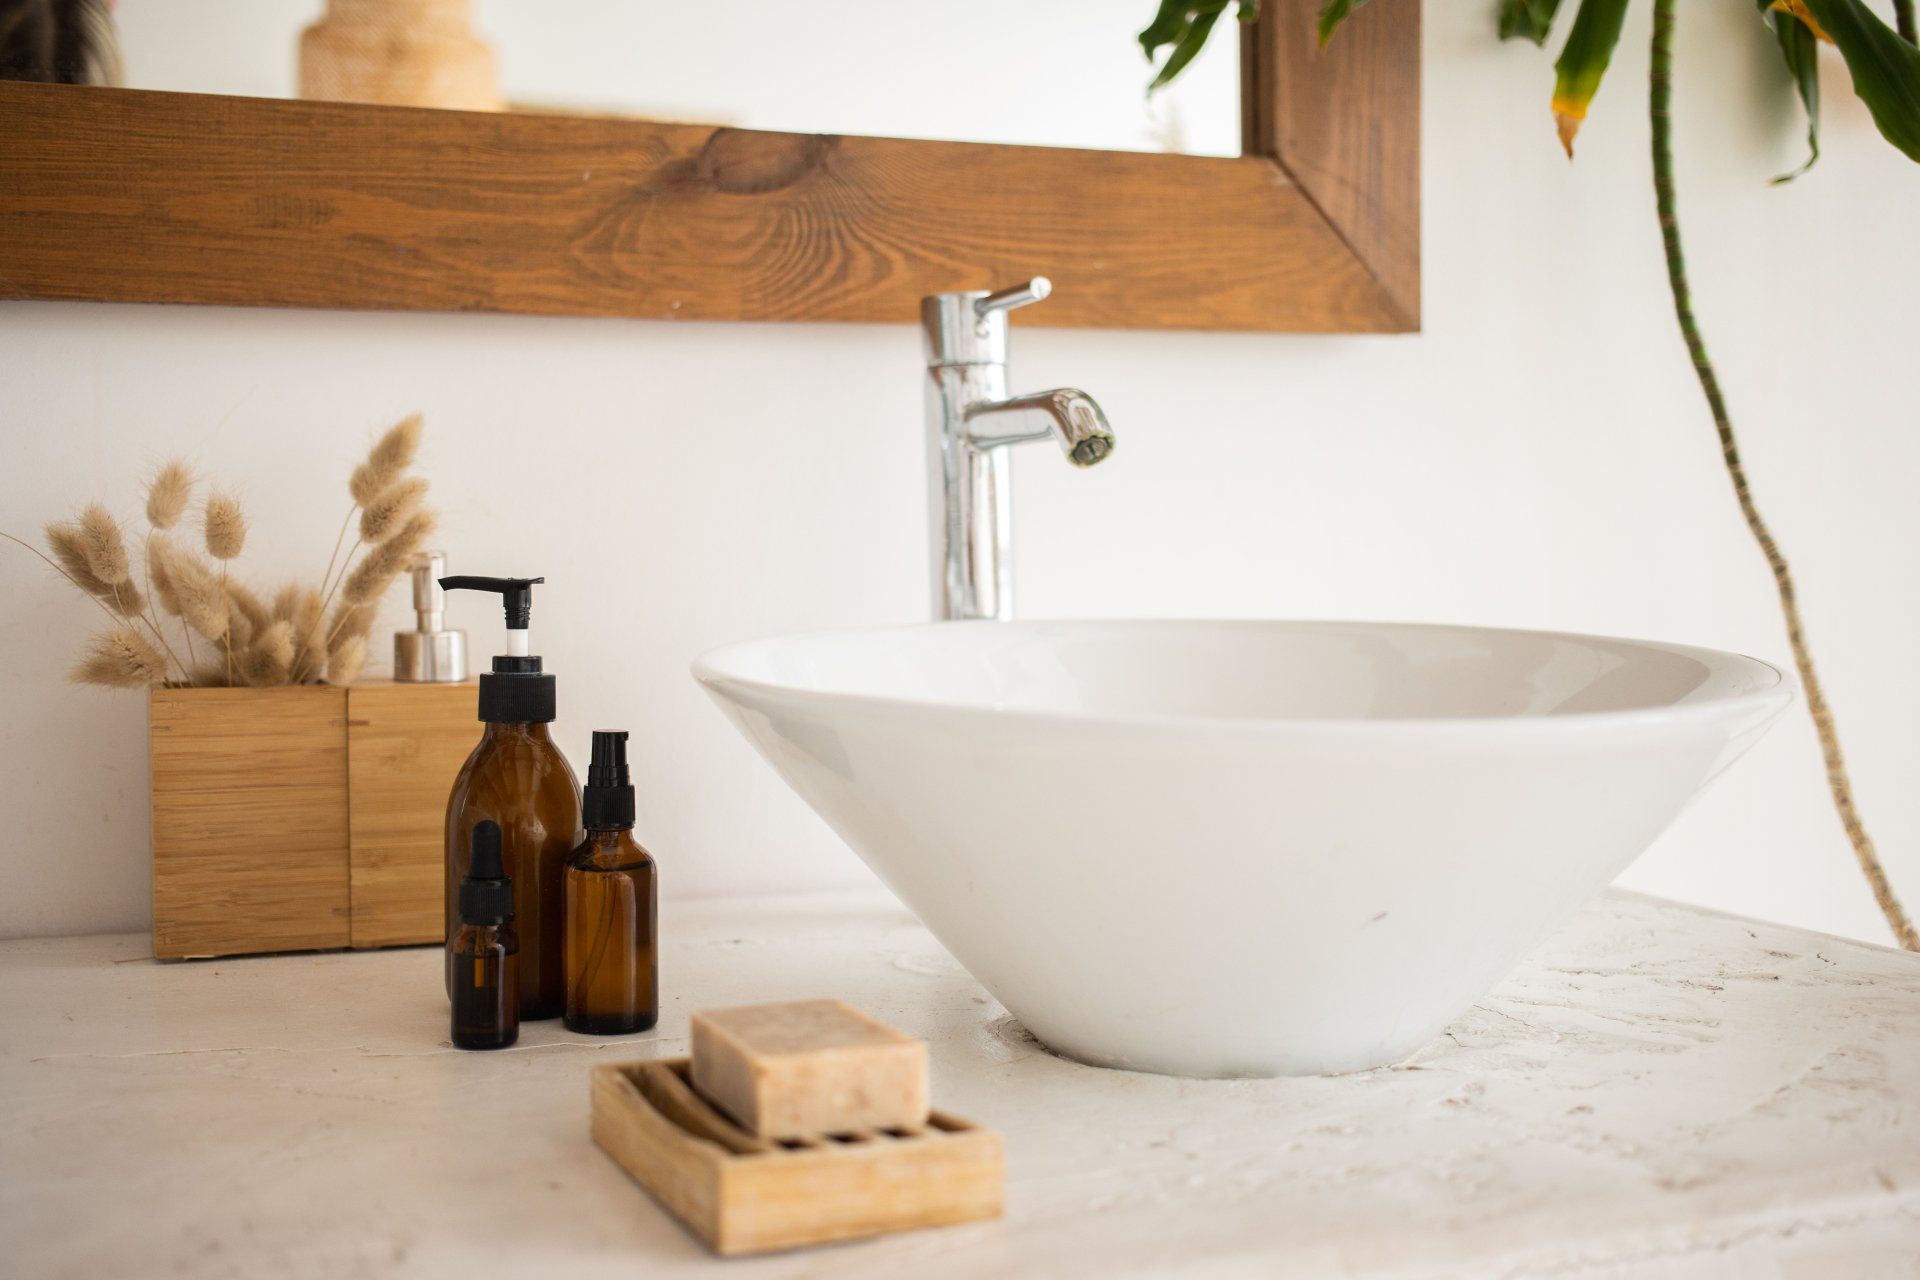 Spruce up your bathroom with new bathroom fixtures installed by Ruiz Plumbing.